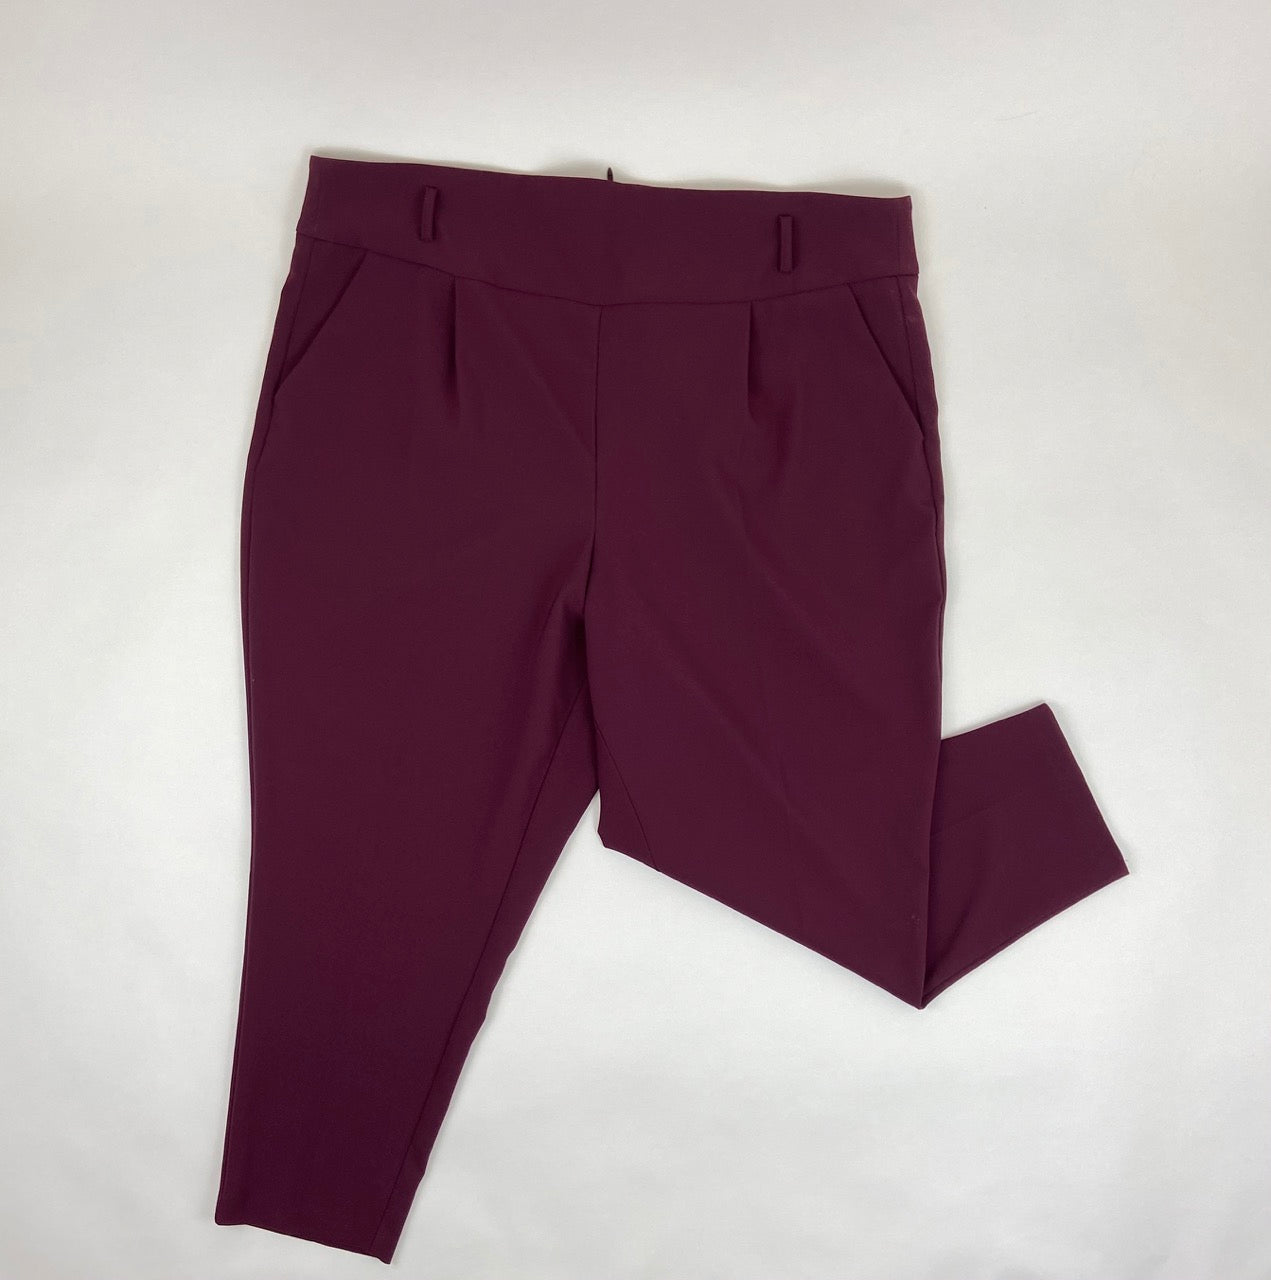 Burgundy Stretch Dress Pants - 24